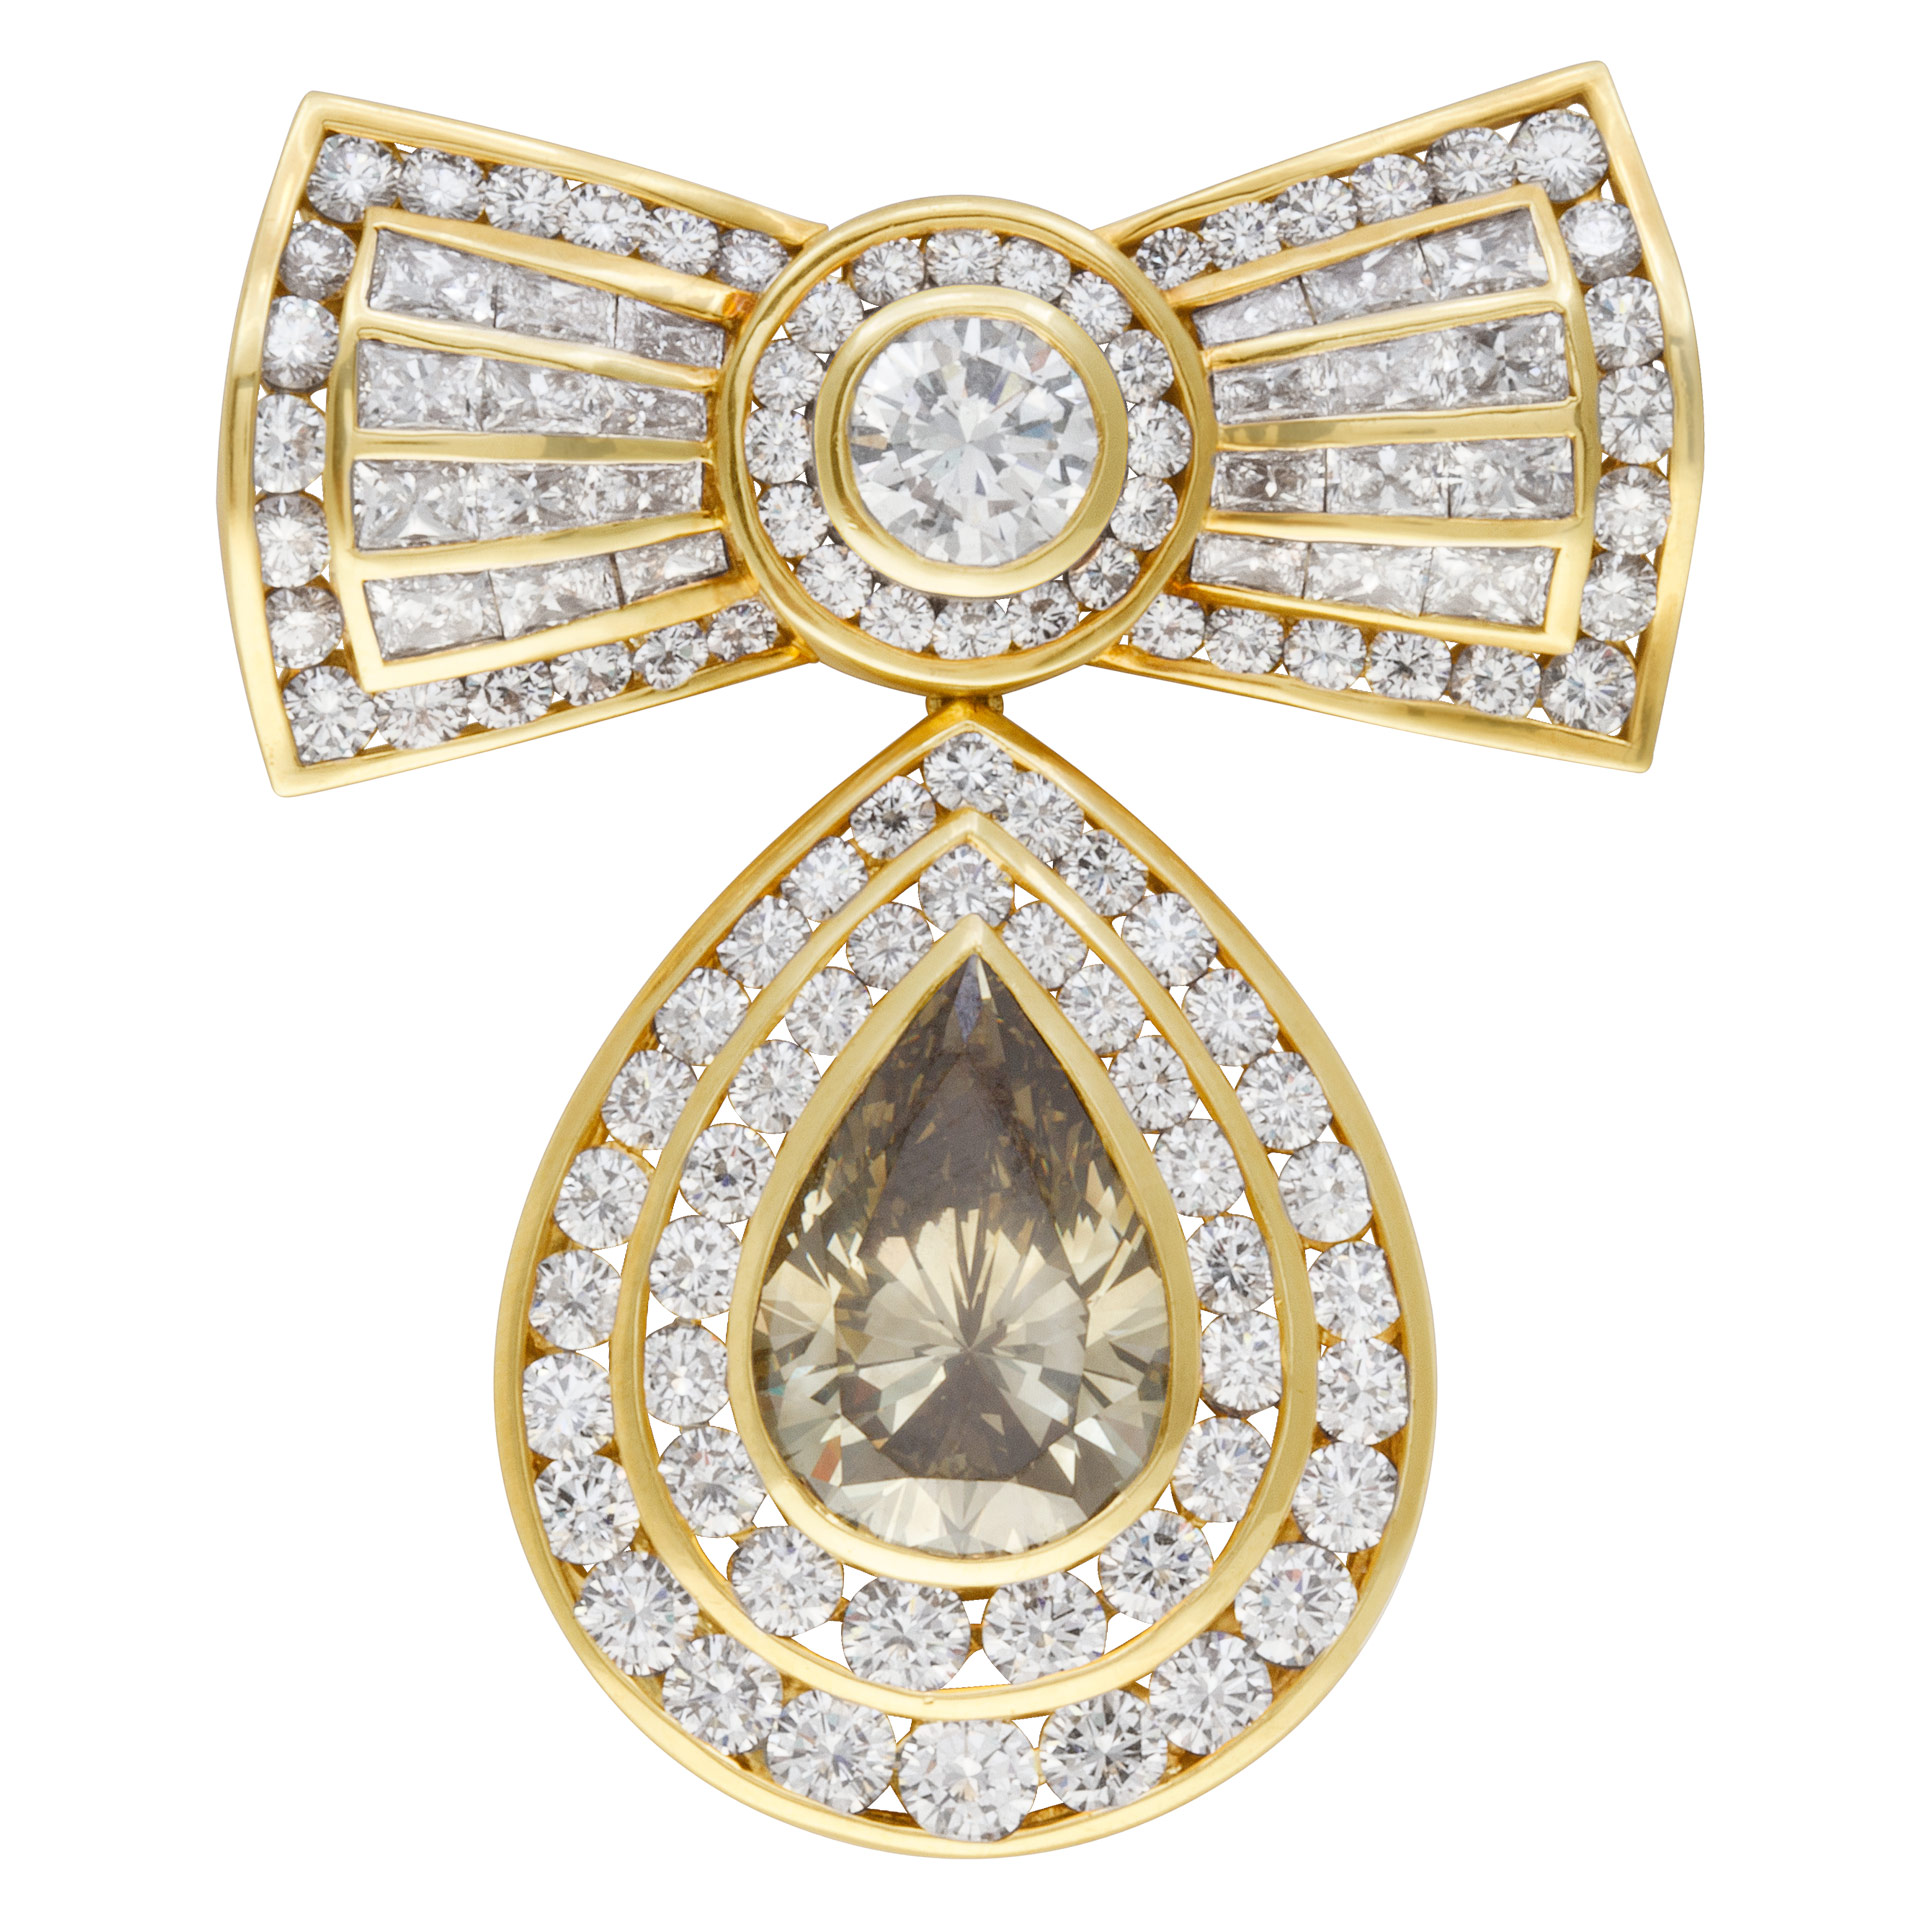 Kutchinsky cut diamond bow pin in 18k. GIA Certified. Total diamond weight 13.8 carats.